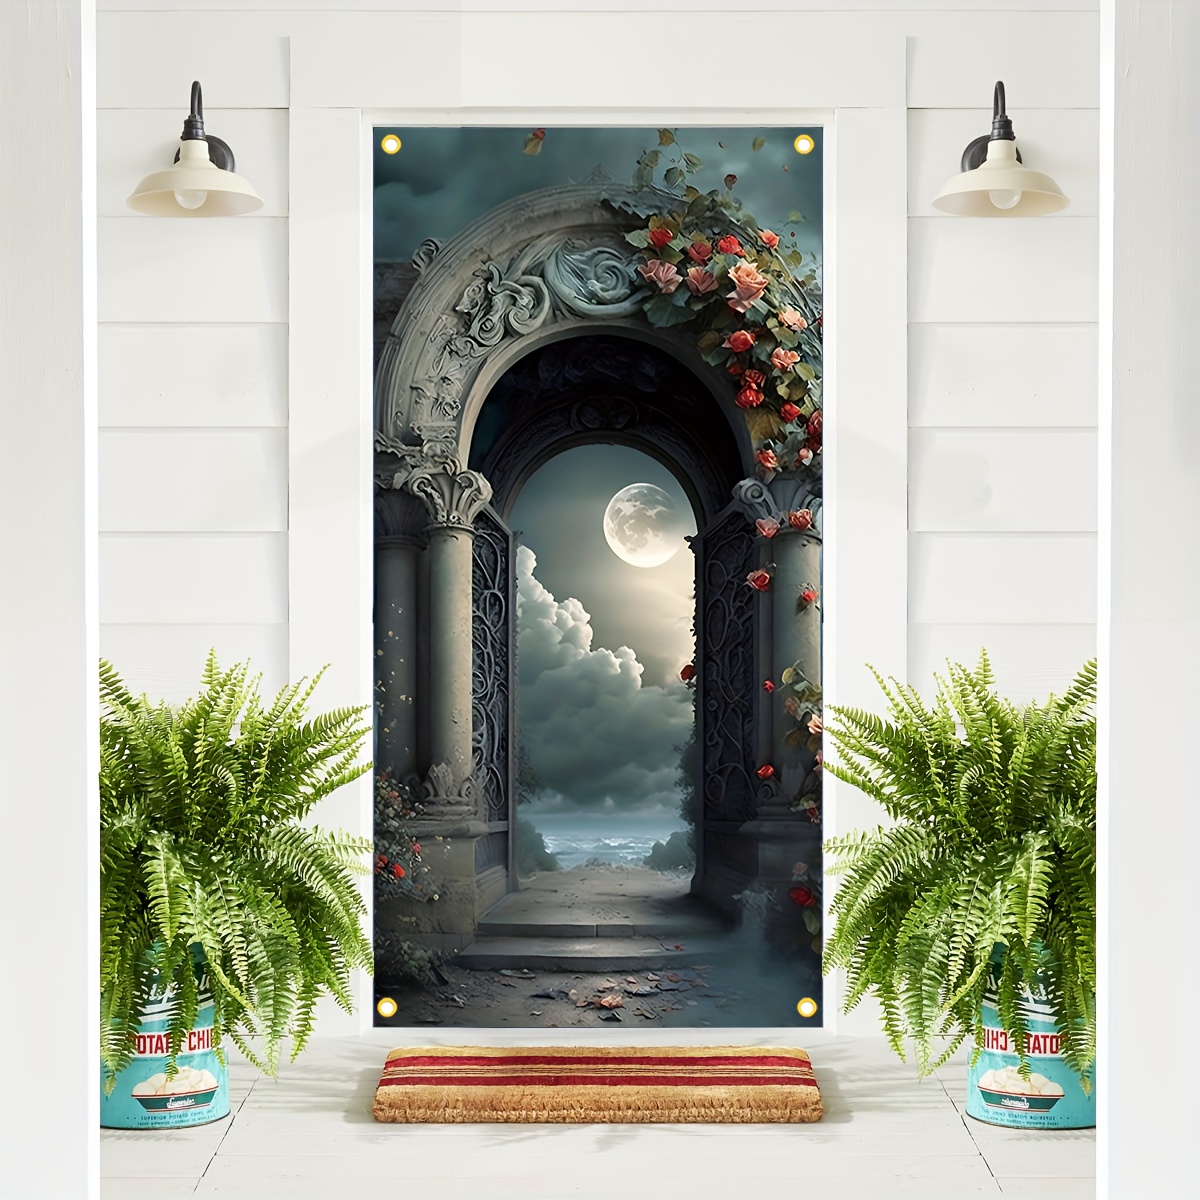 

1pc, Fabric Moon Flower Arch Door Porch Banner Decor, Porch Hanging Decor, Home Decor, Room Decor, Door Decor, Wall Decor, Party Background Decor, Party Decor/supplies/gifts